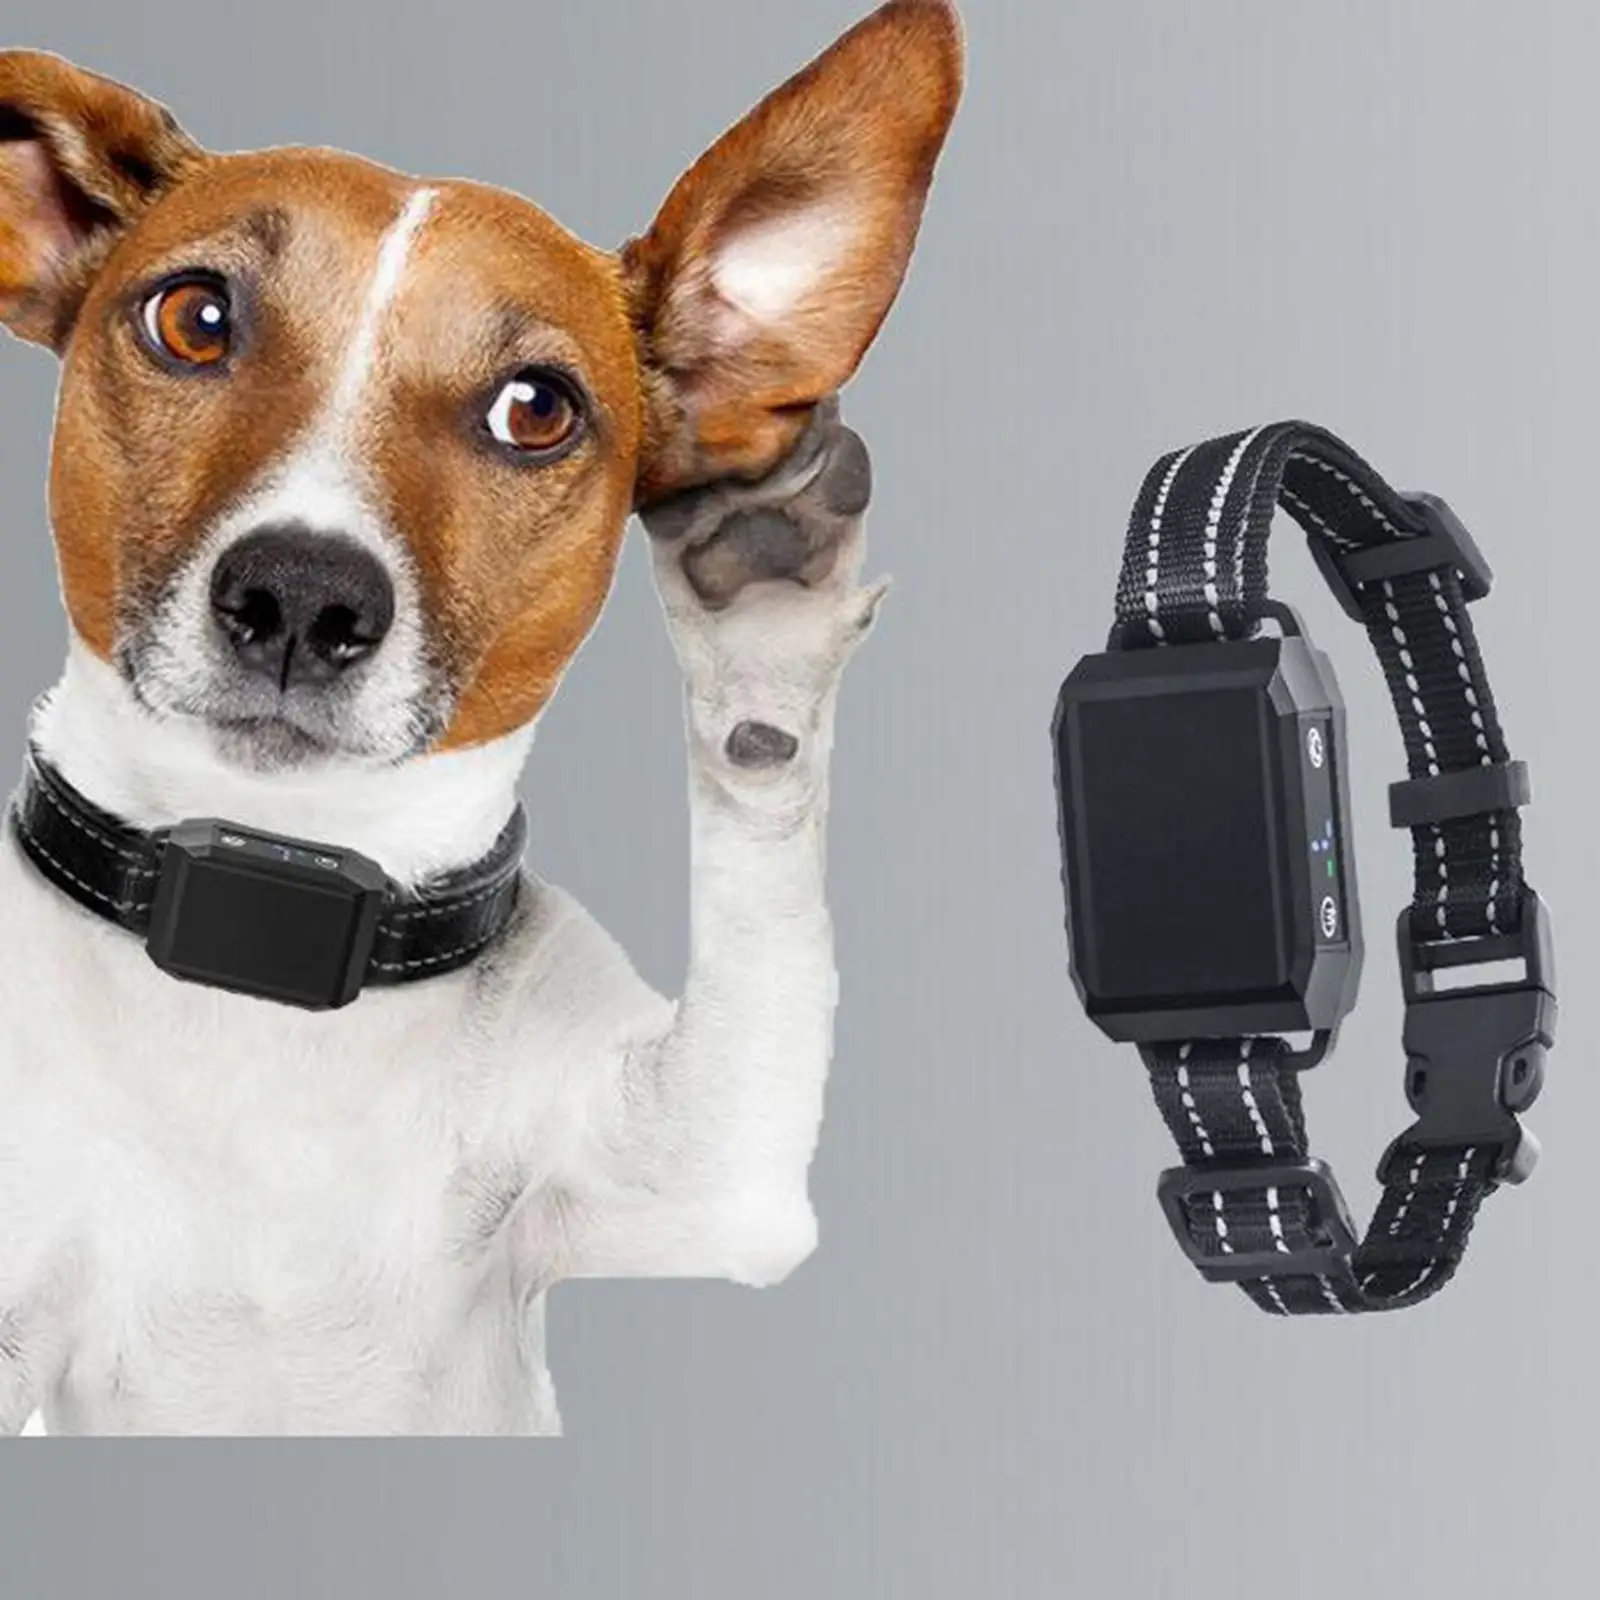 Electric Dog Bark Control Collar Barking Adjustable Behavior Correct Shock Automatic for Dog Small Medium Pet Puppy